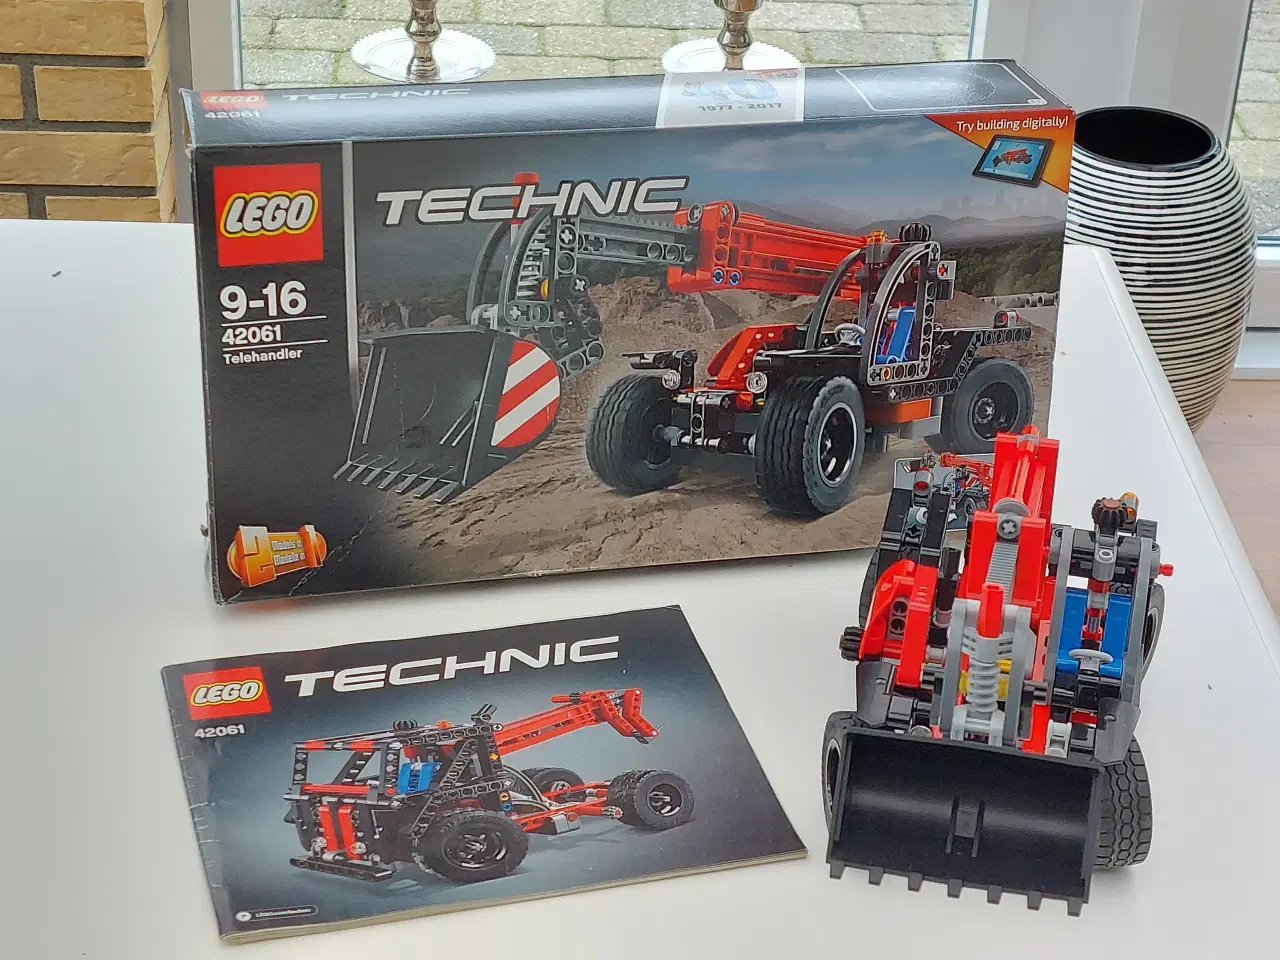 Billede 1 - Lego technic 42061